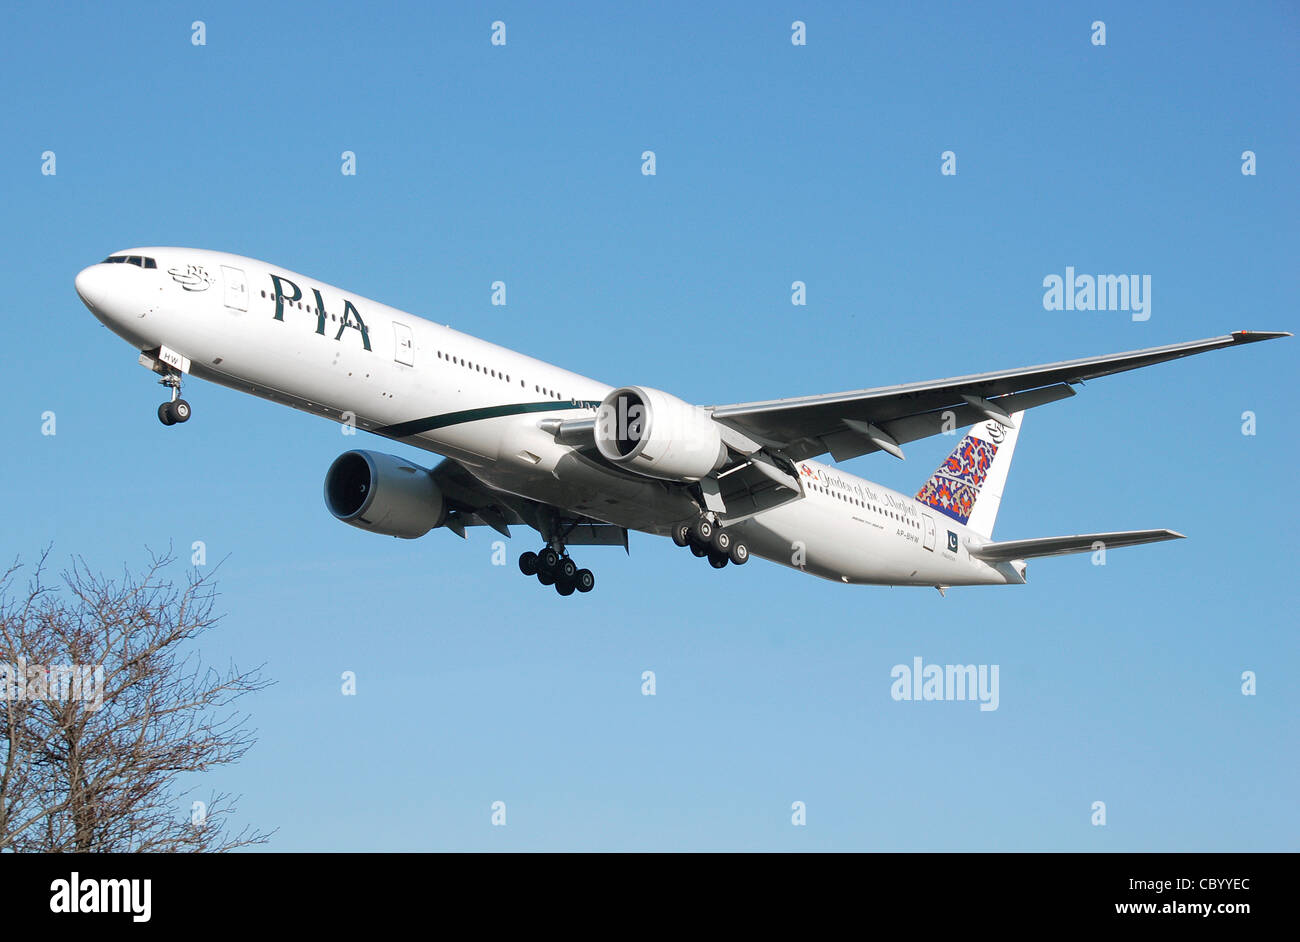 PIA Boeing 777-300ER (AP-BHW) aterriza en el aeropuerto de Heathrow en Londres, Inglaterra. Foto de stock